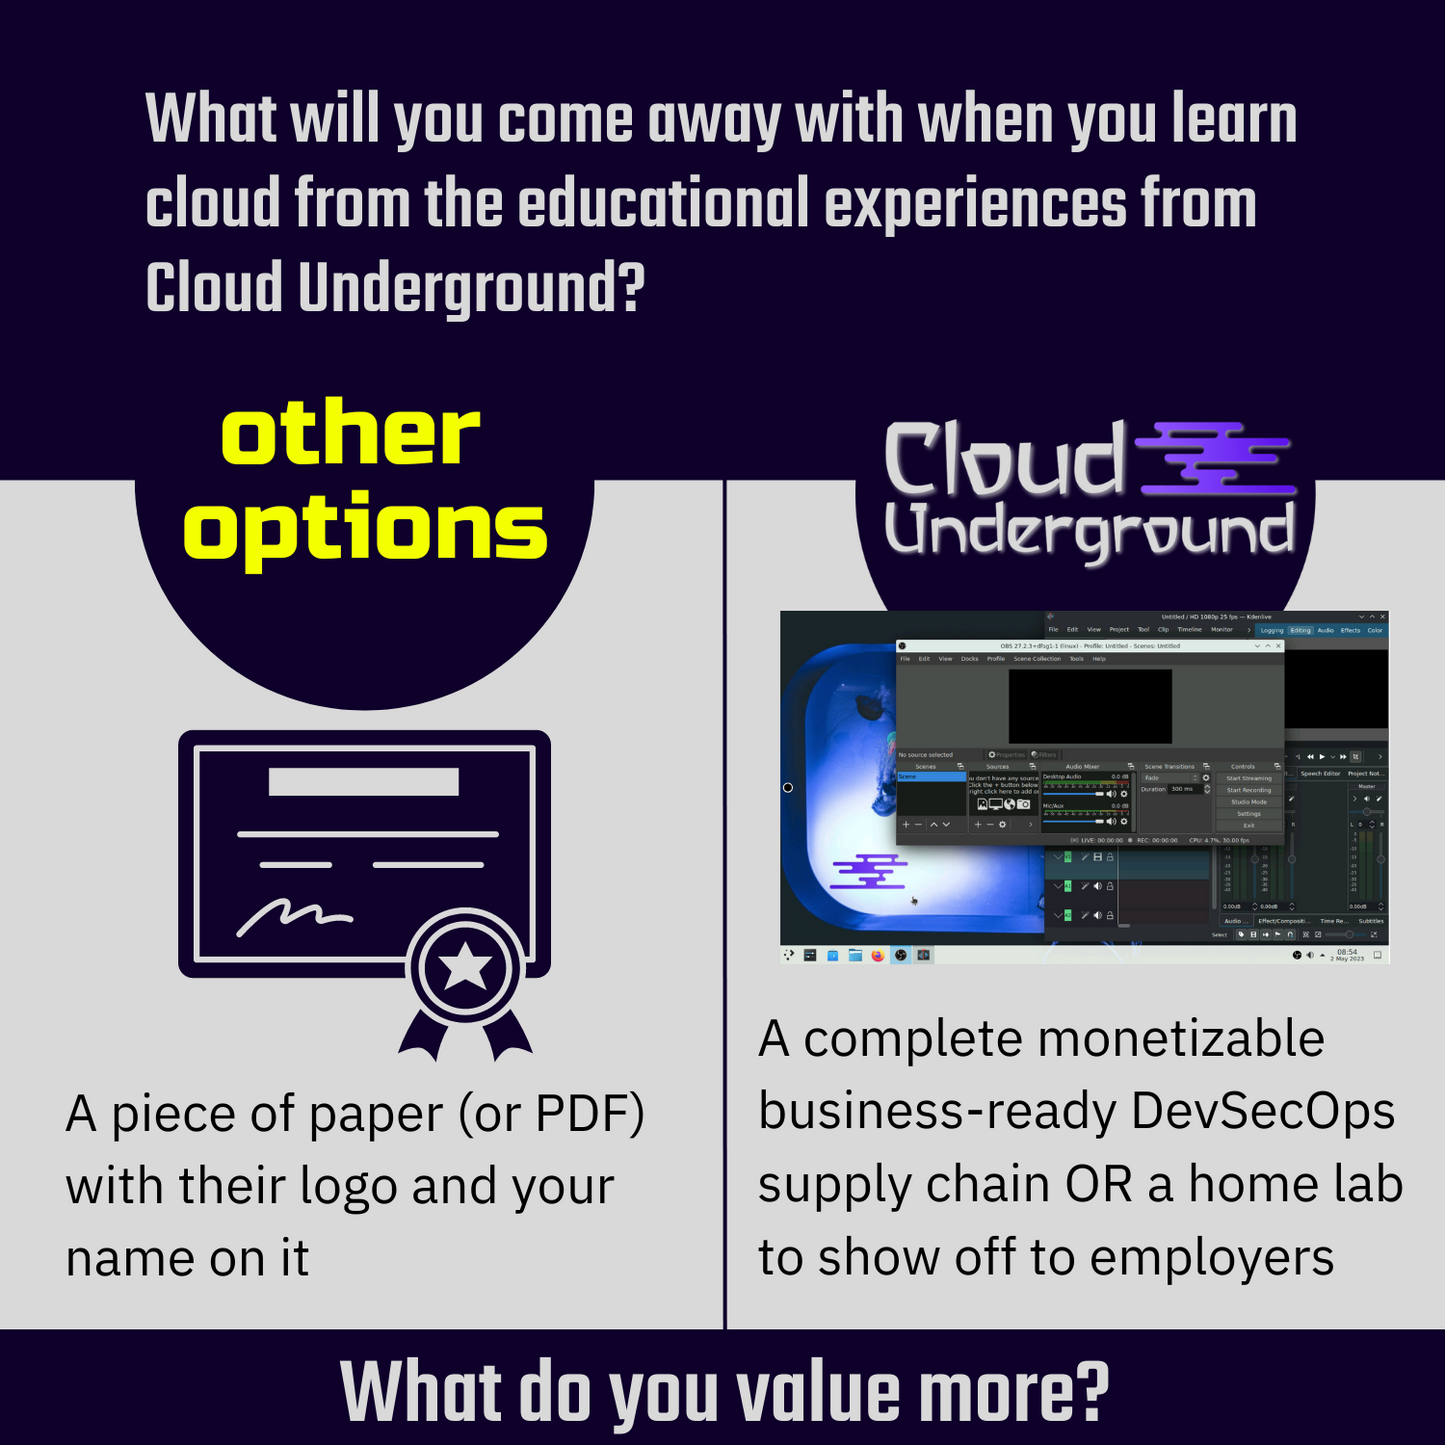 Cloud MVP Blueprint